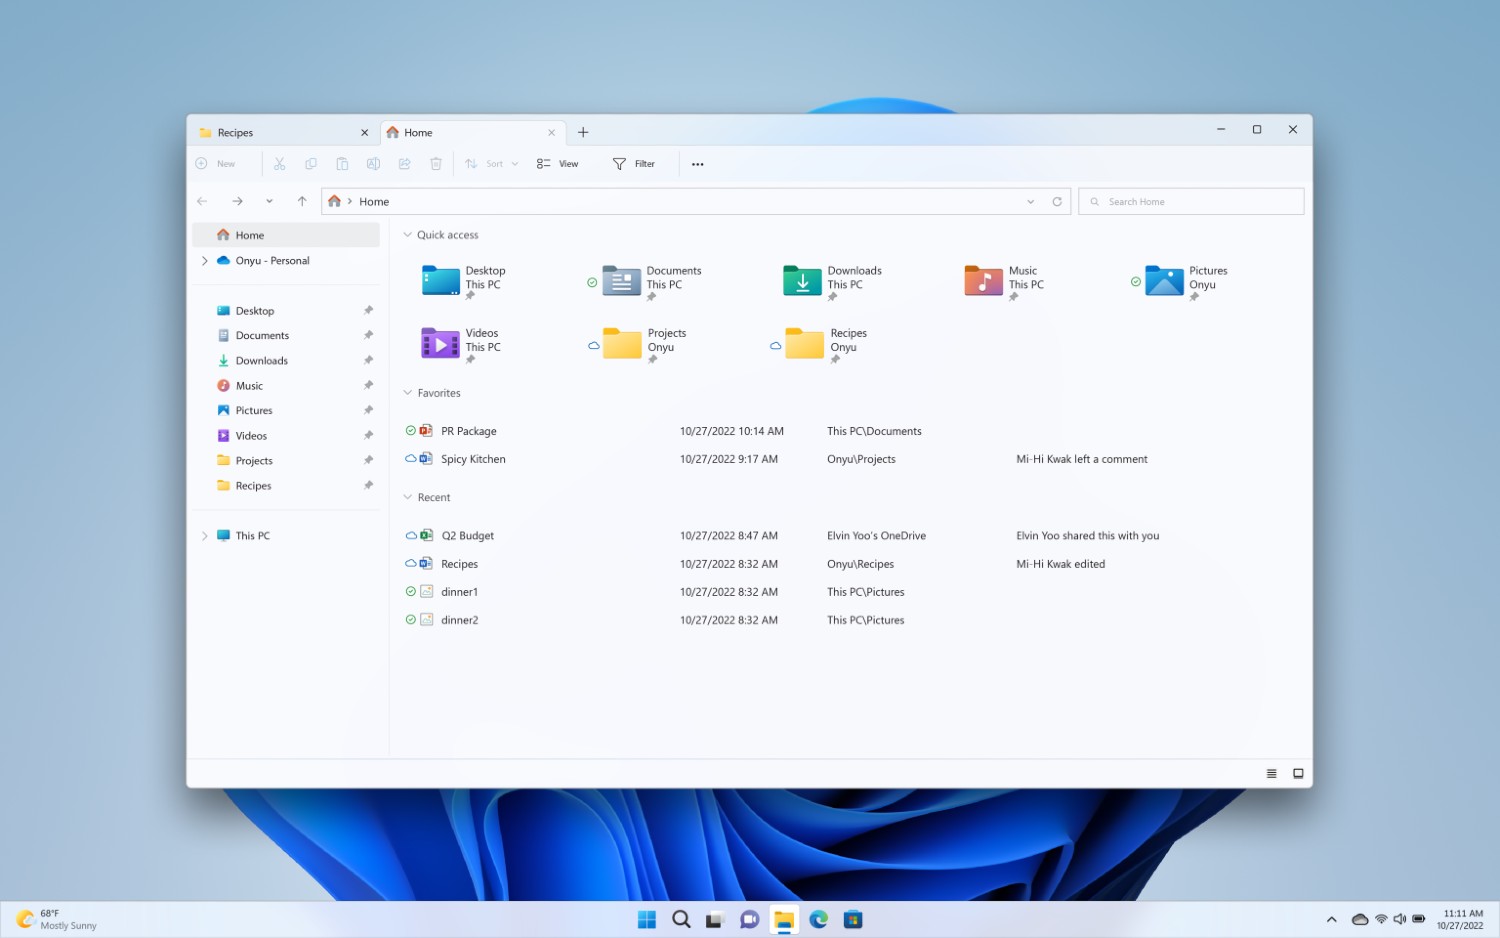 Introducing Windows 11  Windows Experience Blog